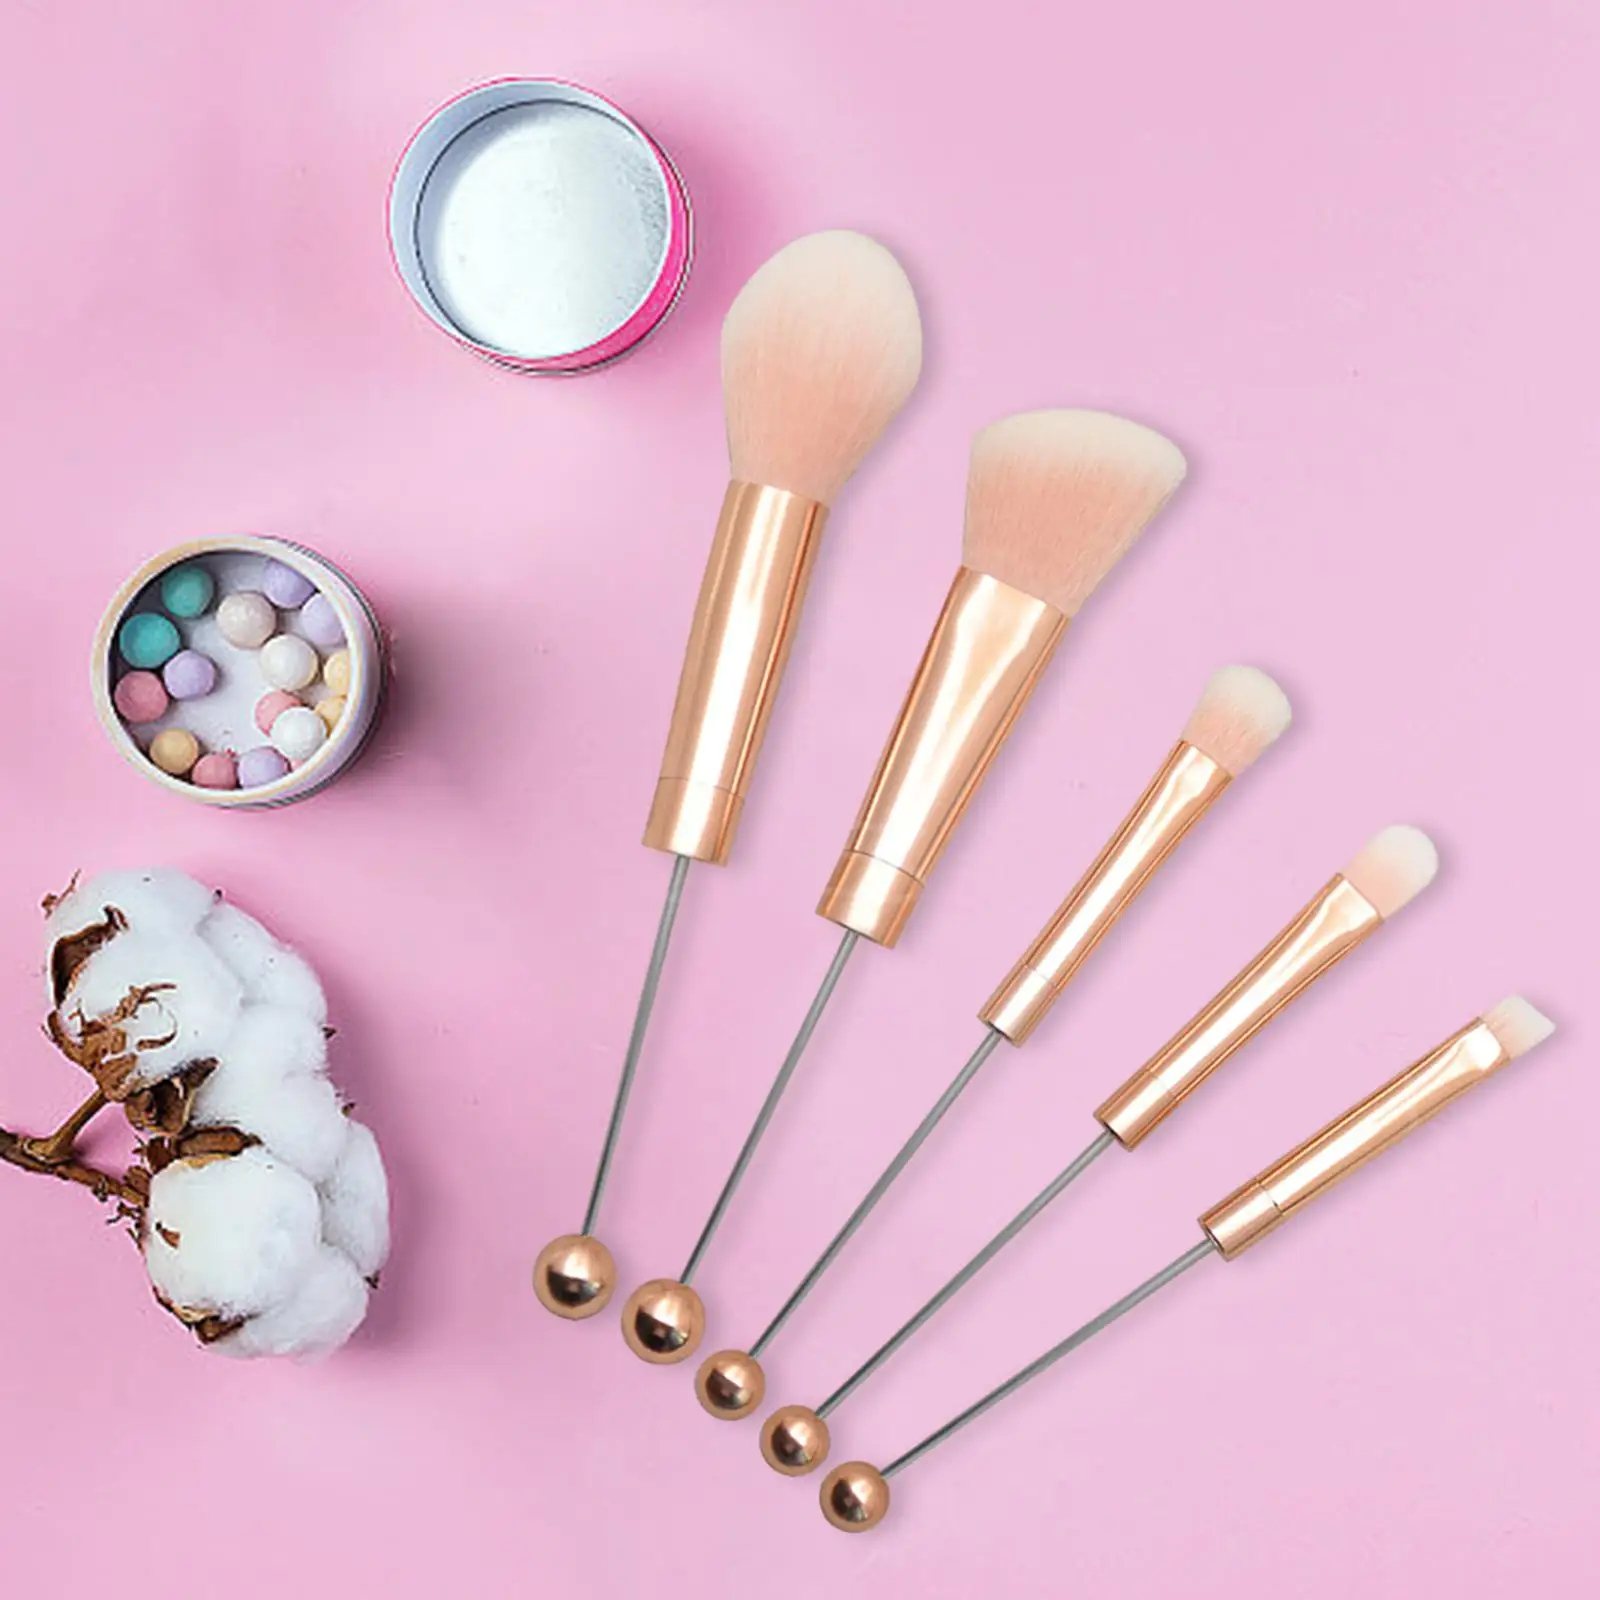 5x Eye Makeup Brush Set DIY Blending Face Powder Multifunctional Cosmetic Brushes for Adults Girlfriend Lady Women Holiday Gifts